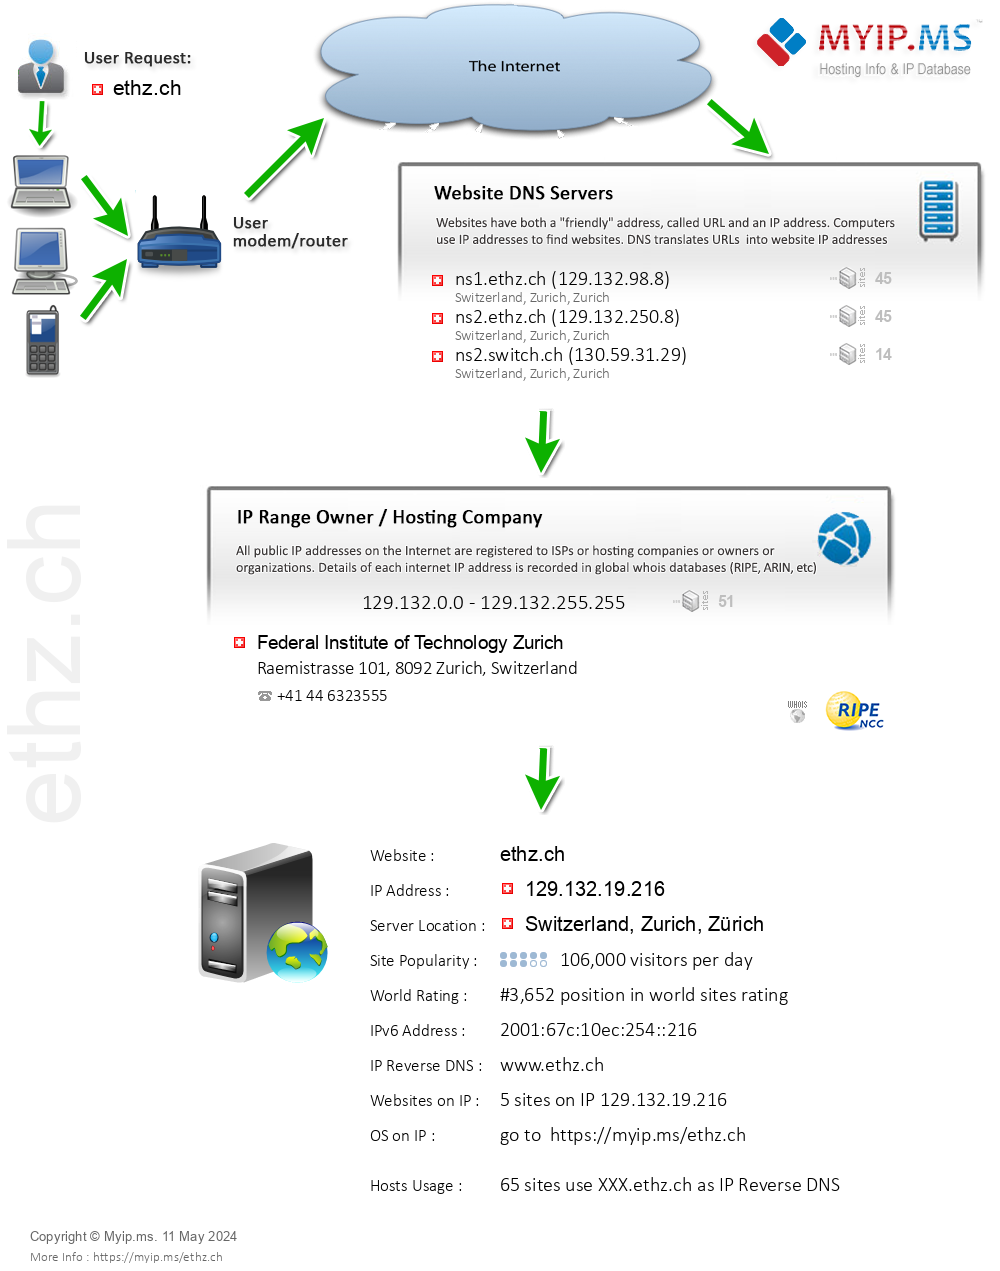 Ethz.ch - Website Hosting Visual IP Diagram